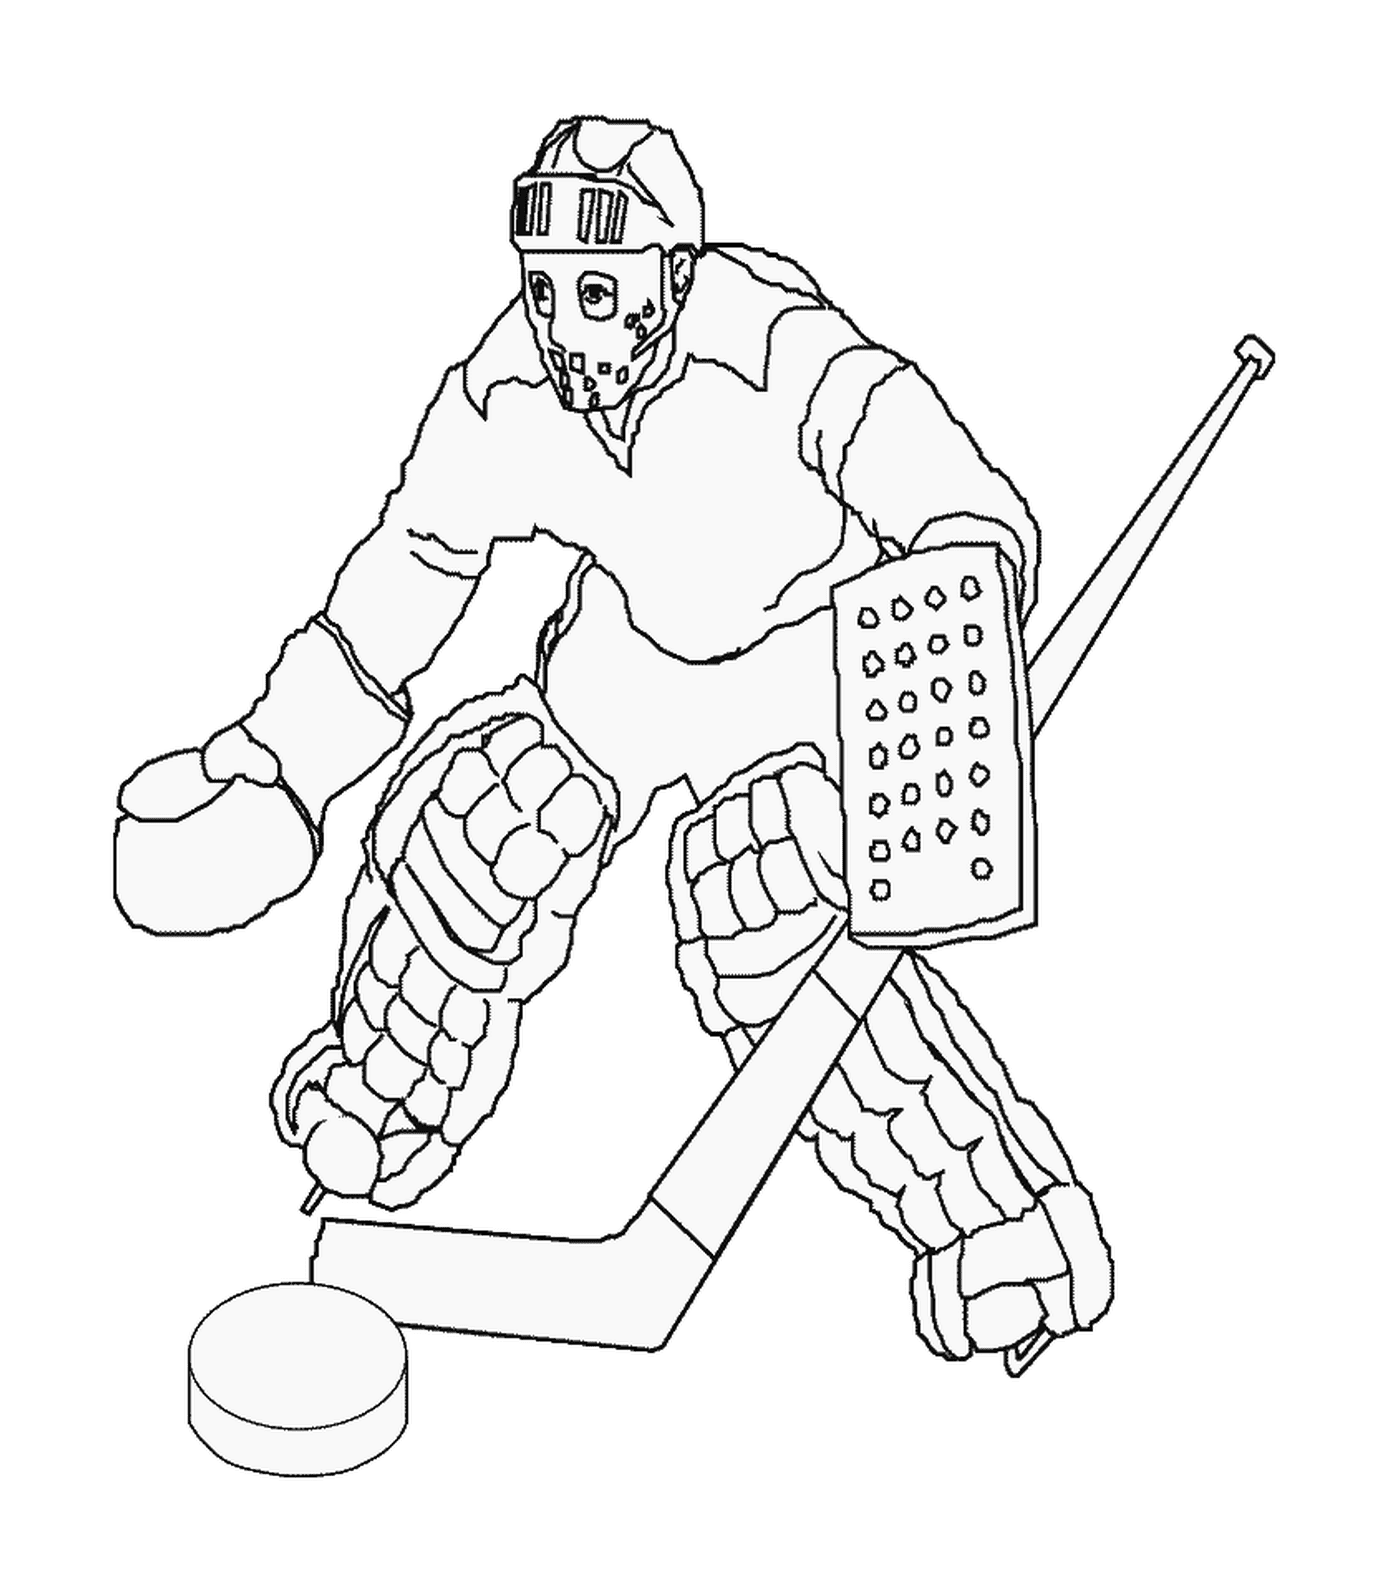  Portero de hockey sobre hielo 